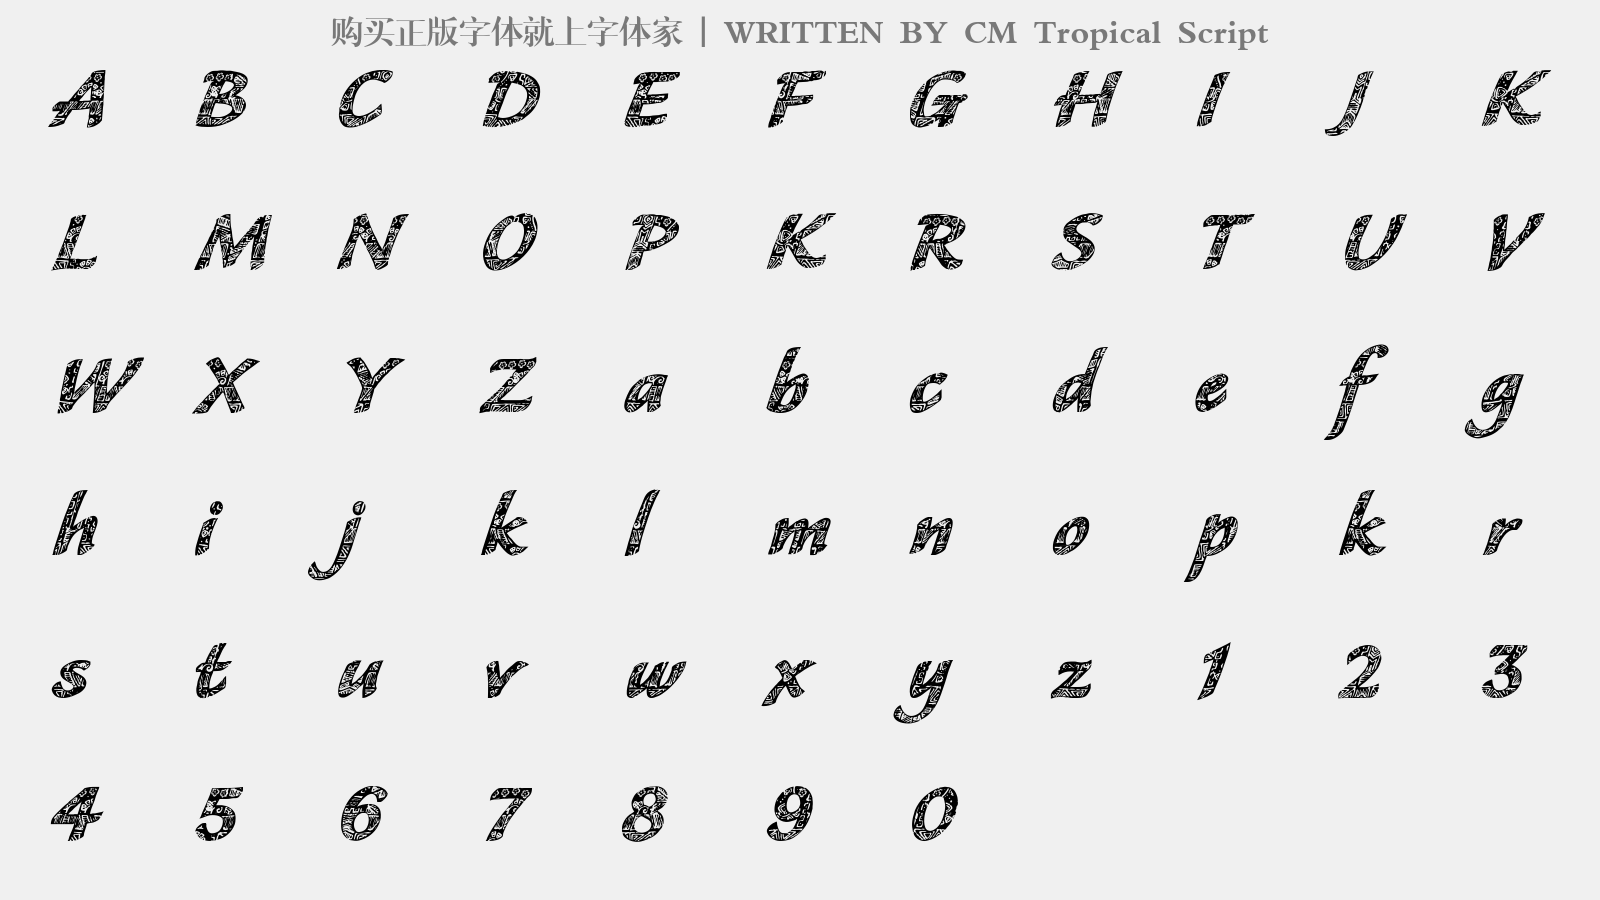 CM Tropical Script - 大写字母/小写字母/数字